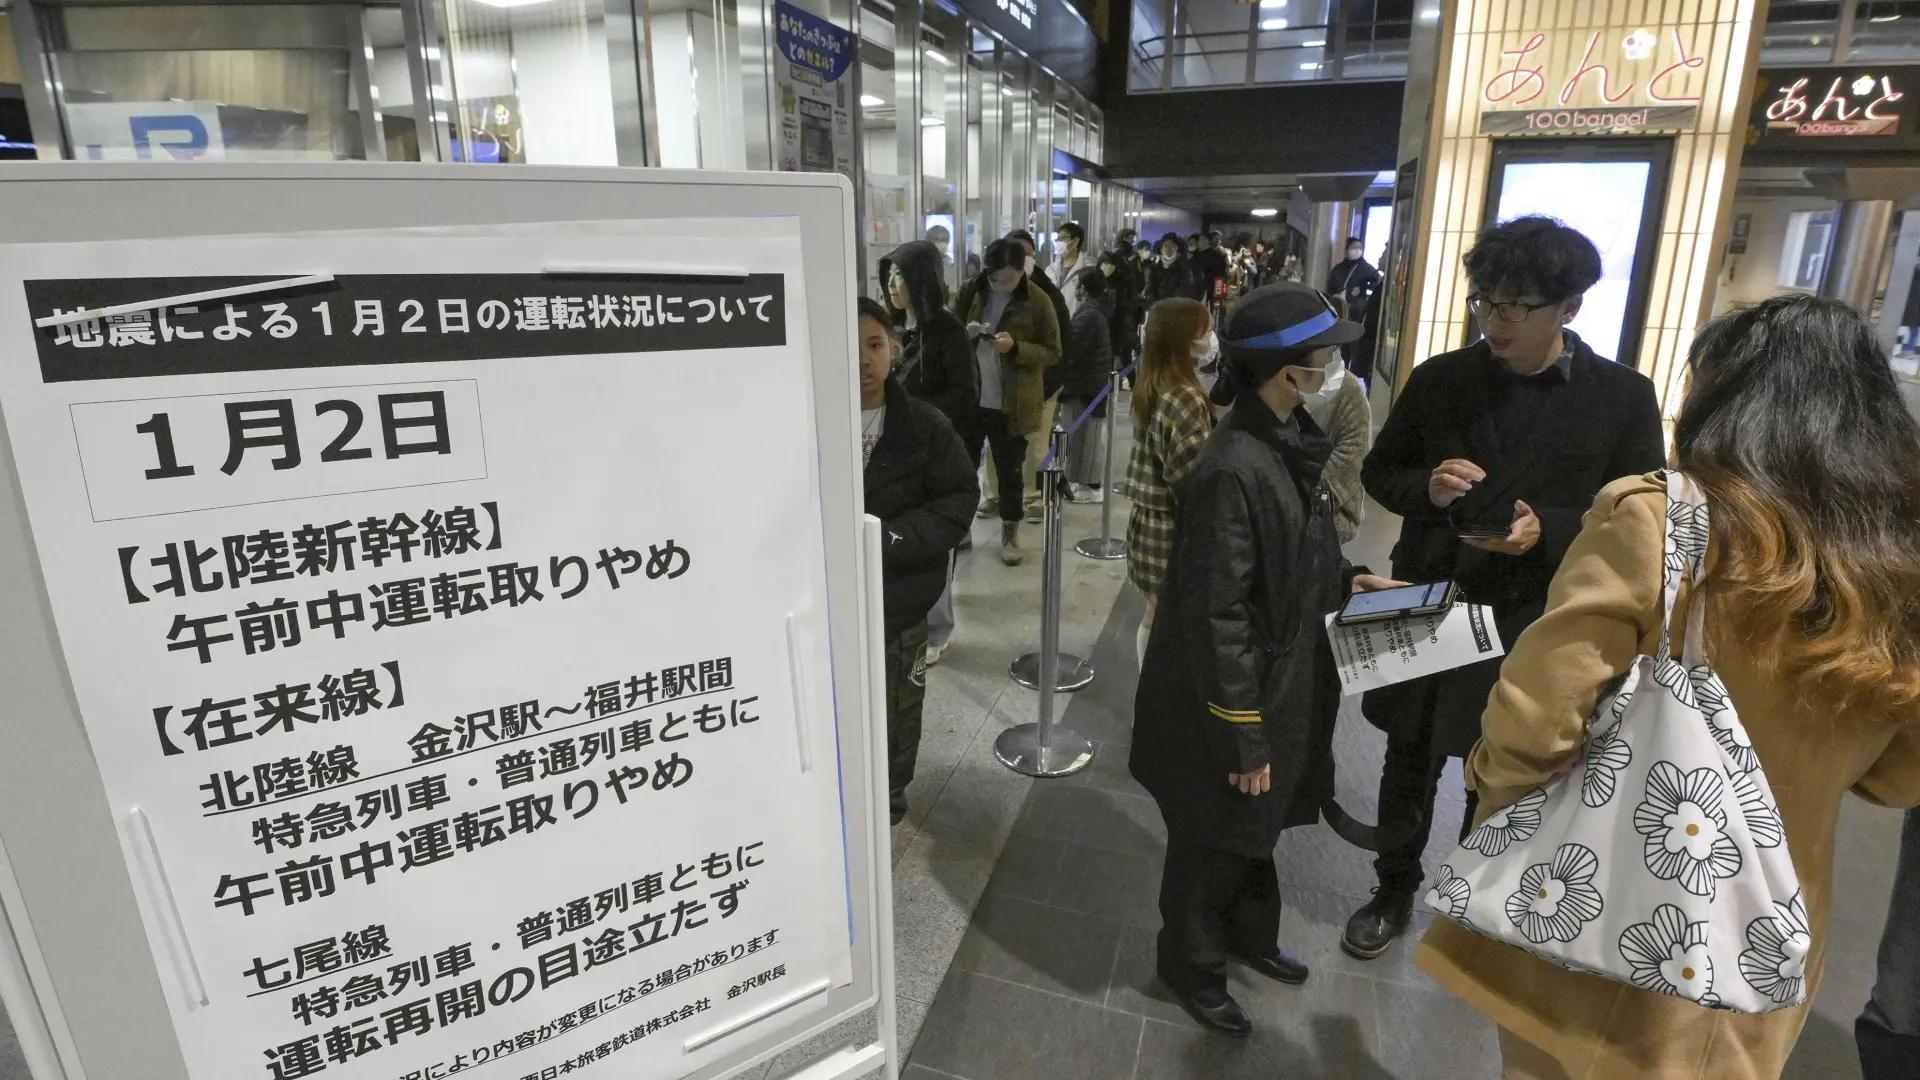 Japan, putnici, Kanazava posle zemljotresa, 2 jan 2023 - Kyodo News via AP Tanjug-6593ba13efd59.webp